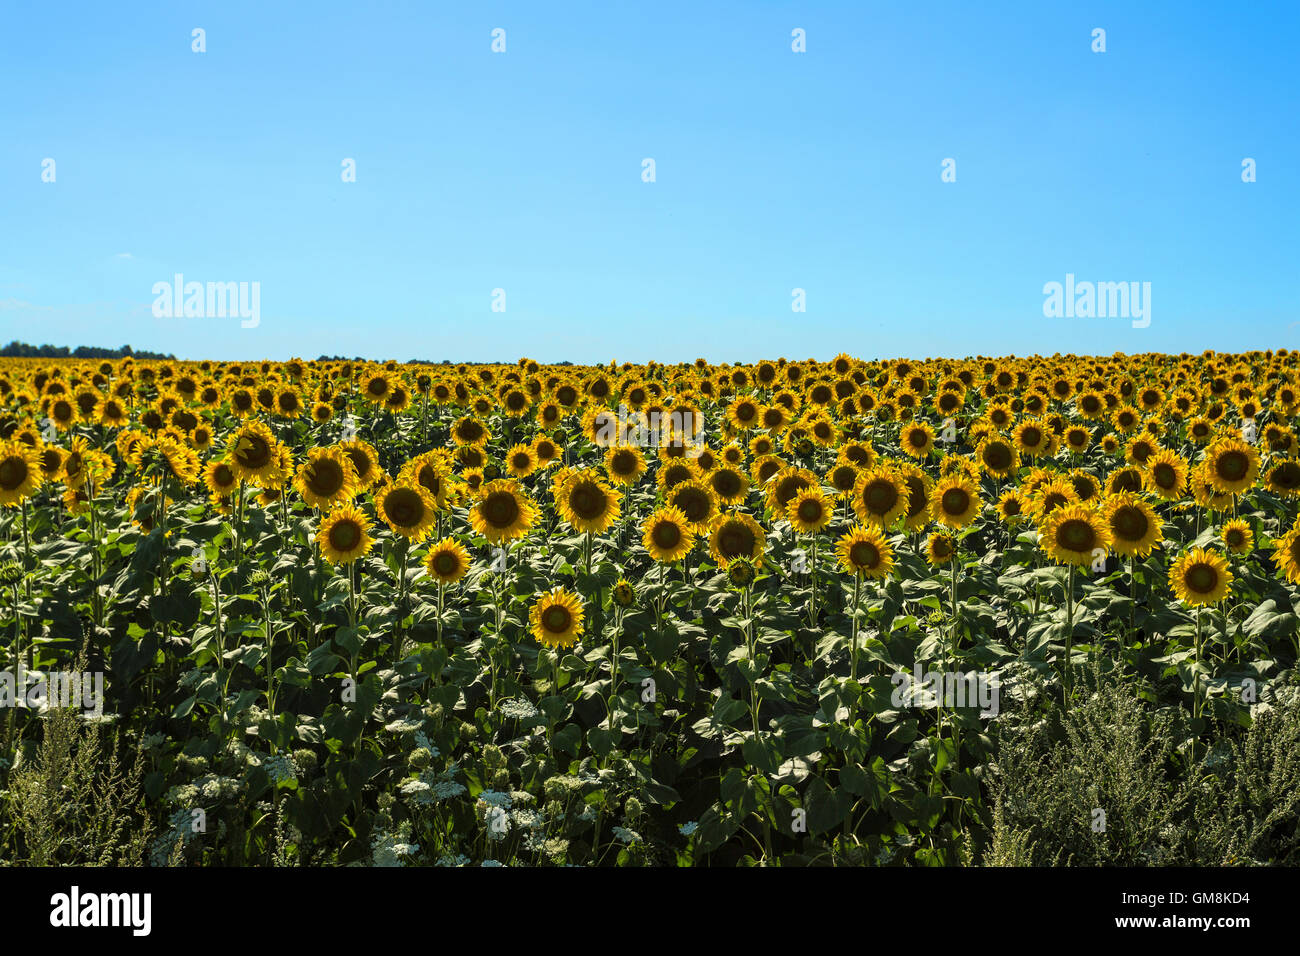 Sunflowers on blue sky Stock Photo